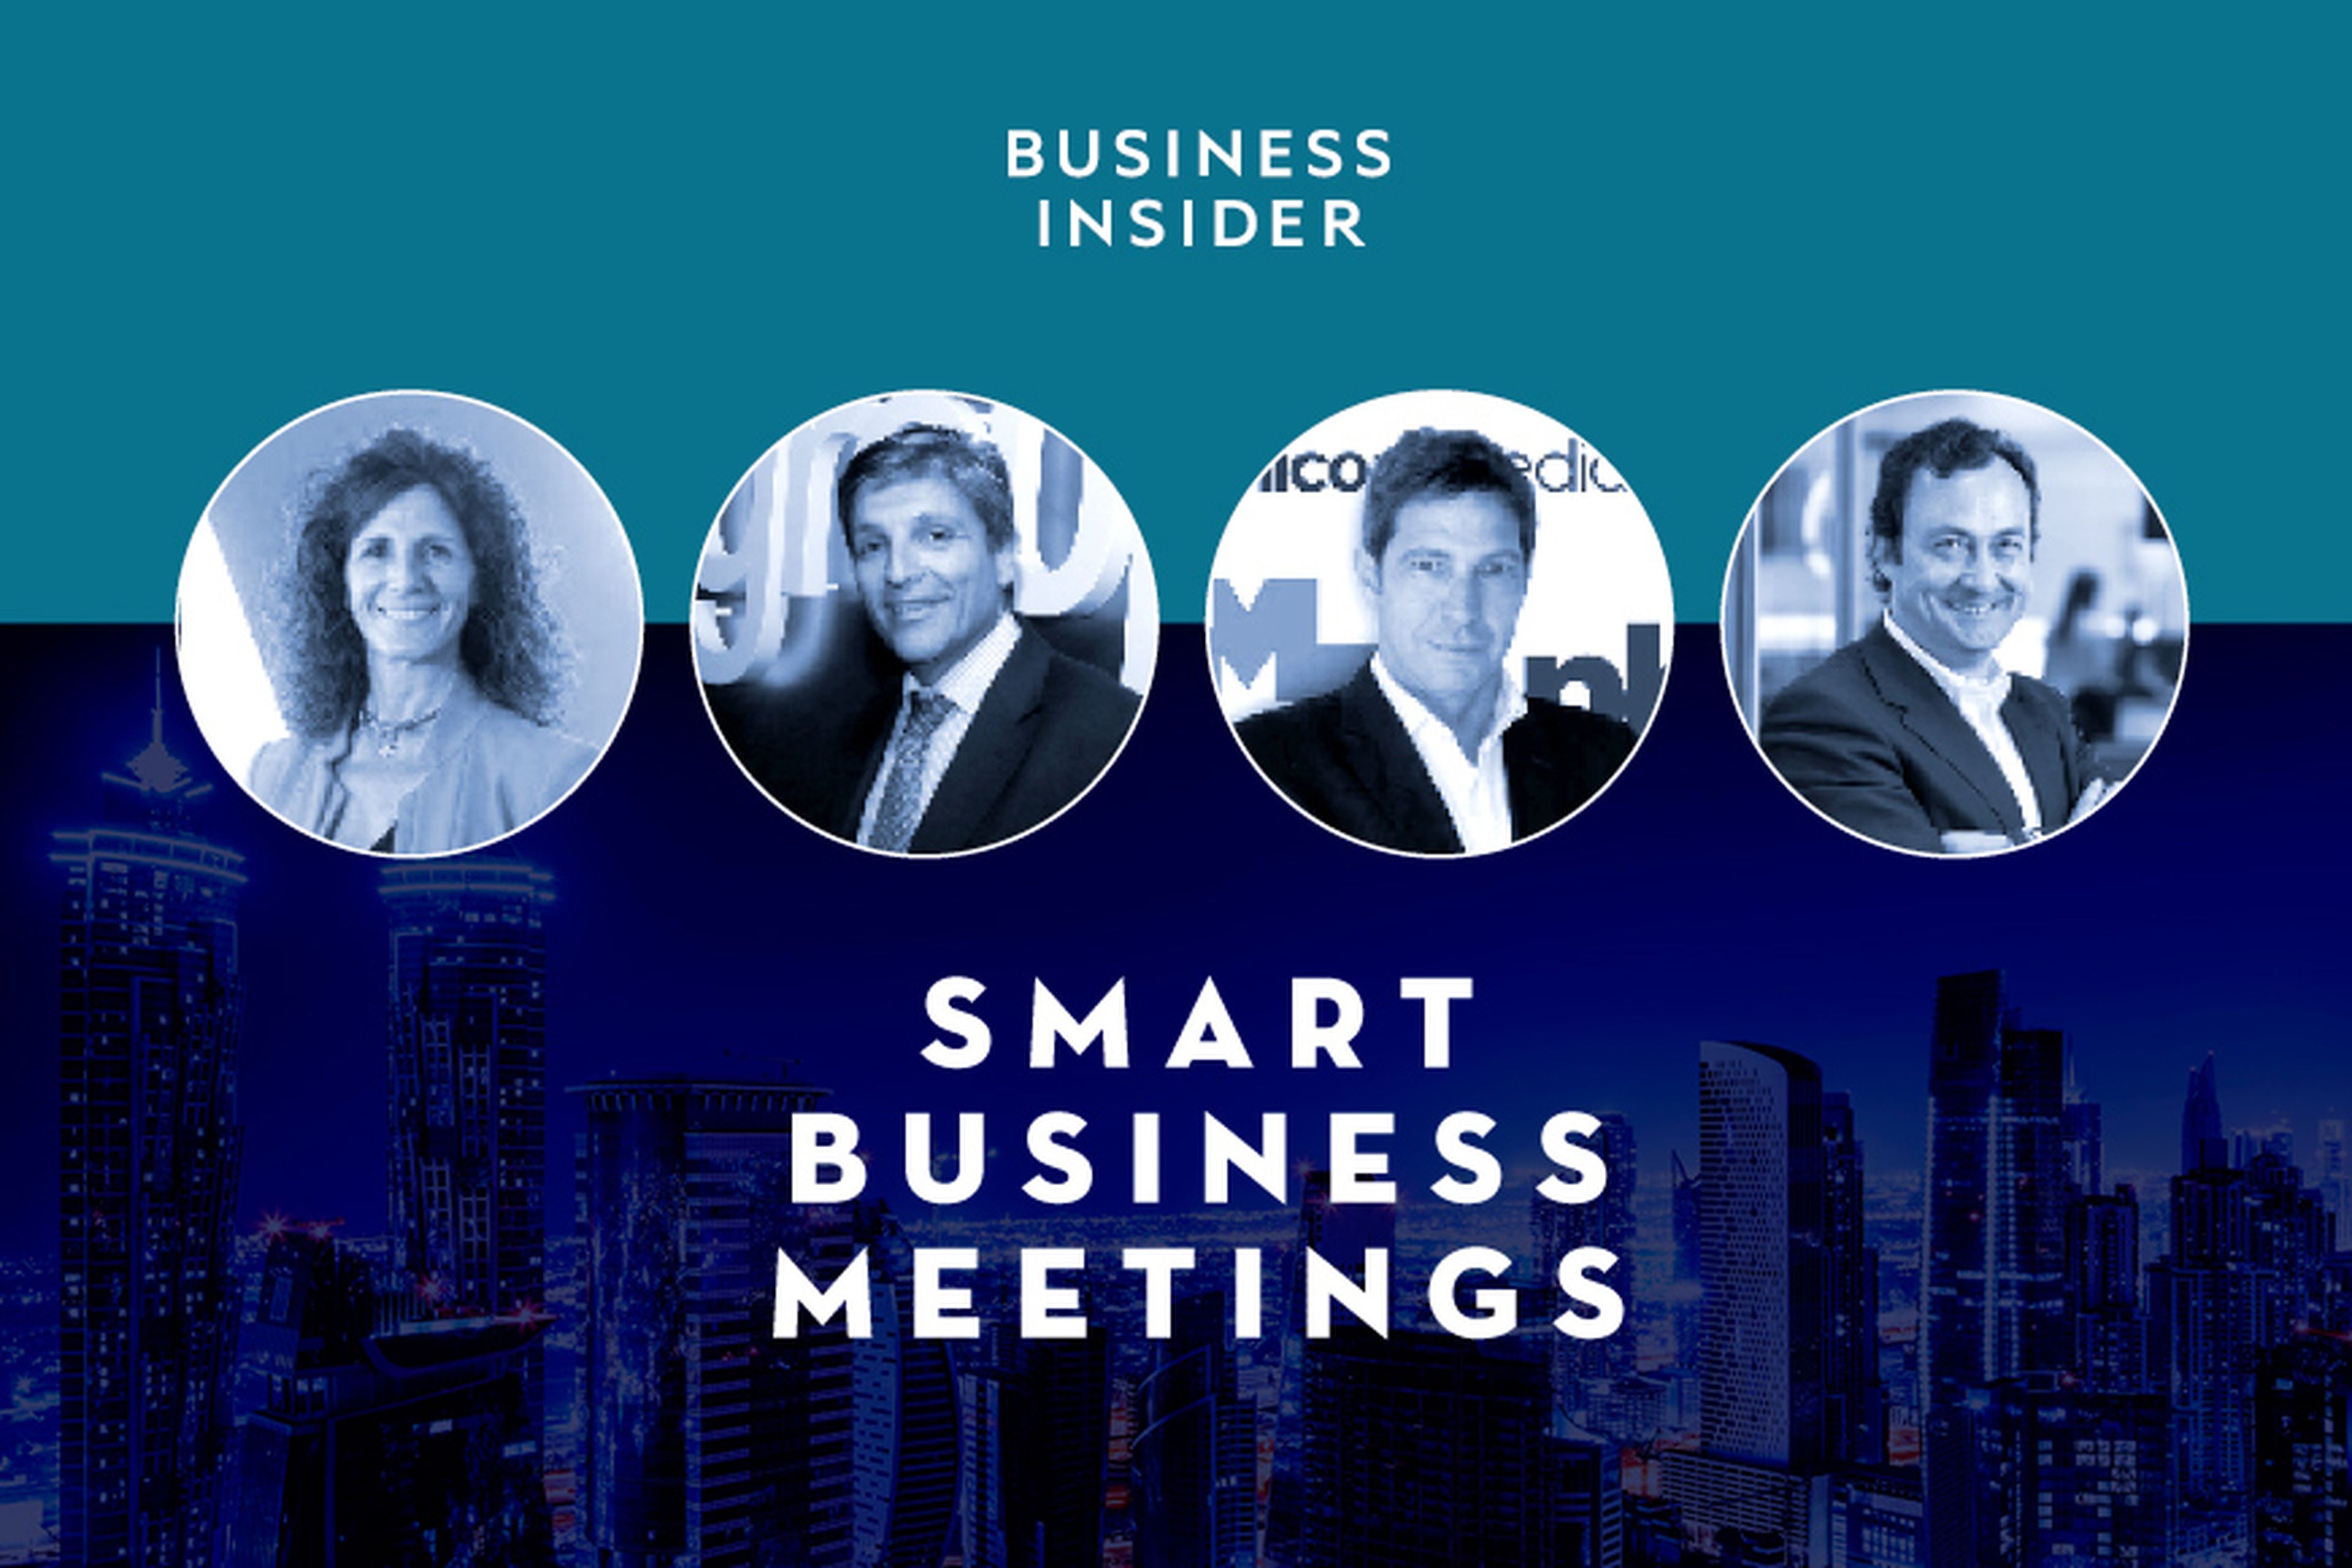 Smart Business Meeting